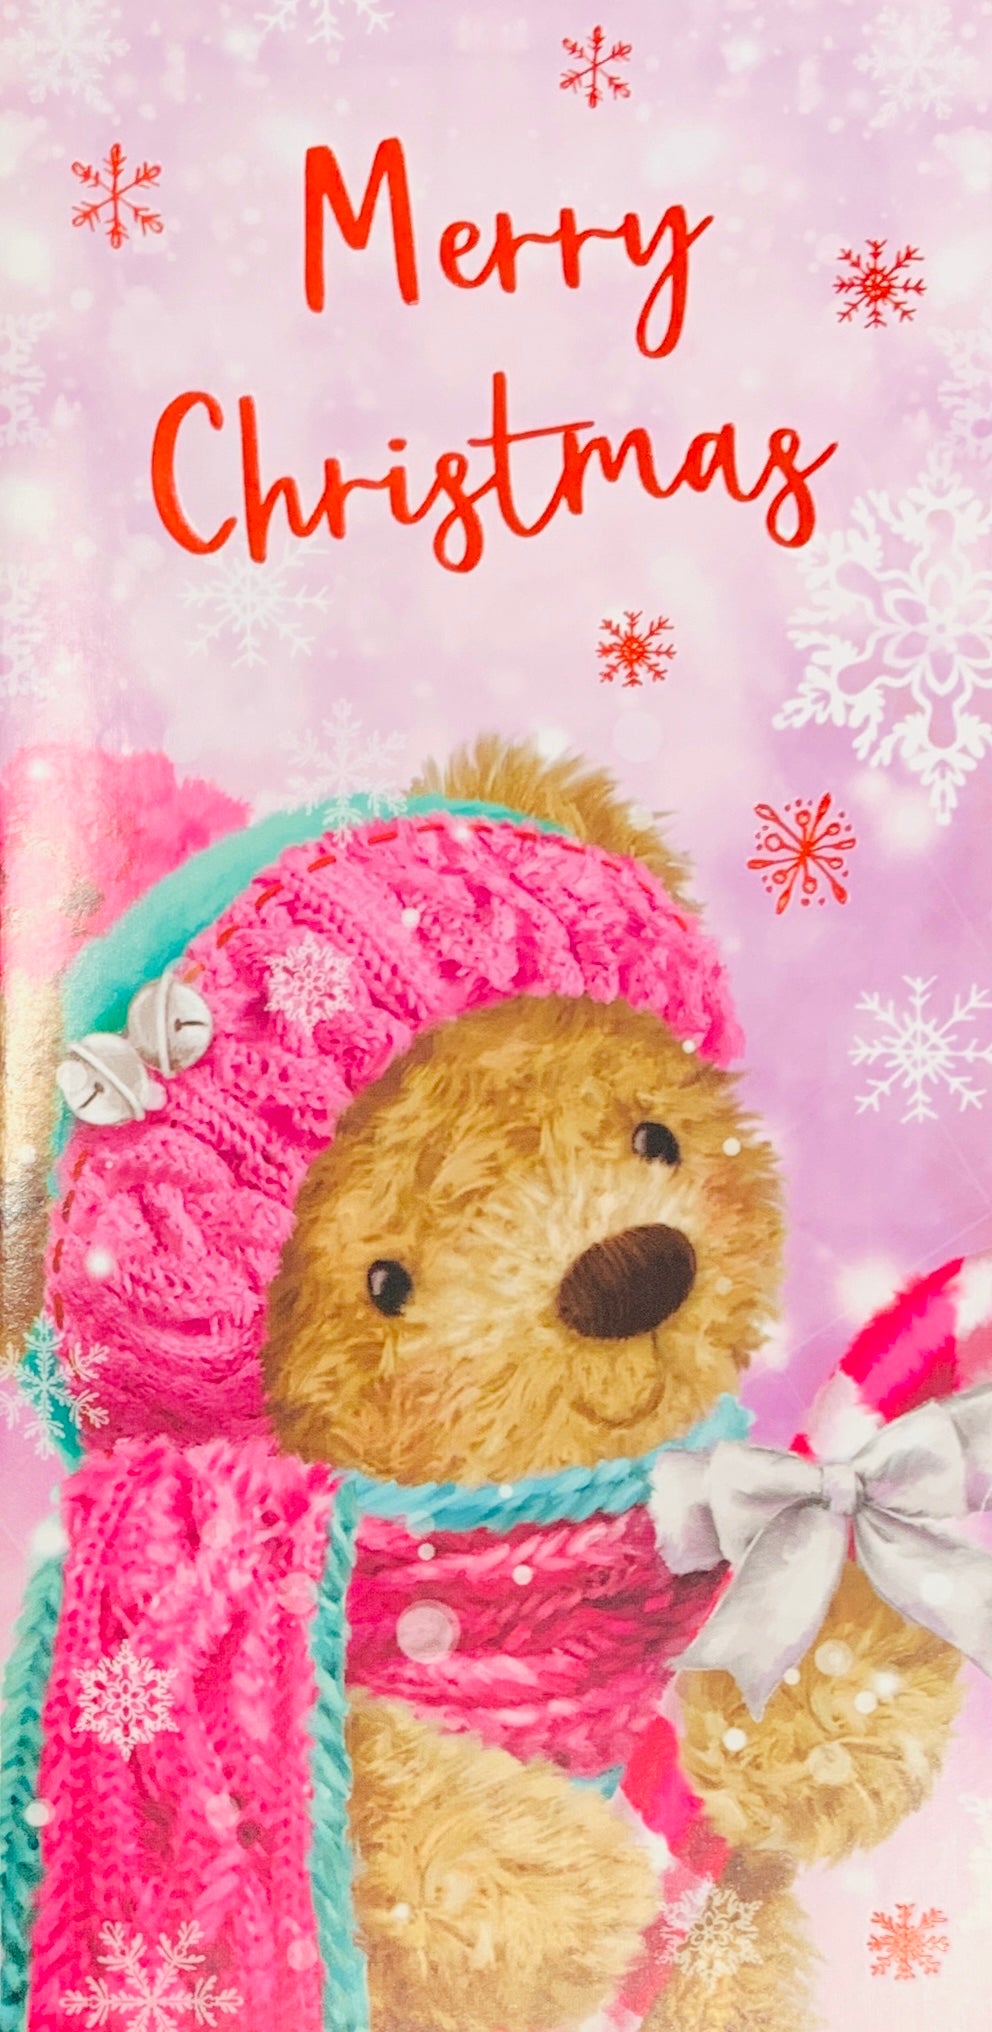 Christmas gift wallet - cute pink bear